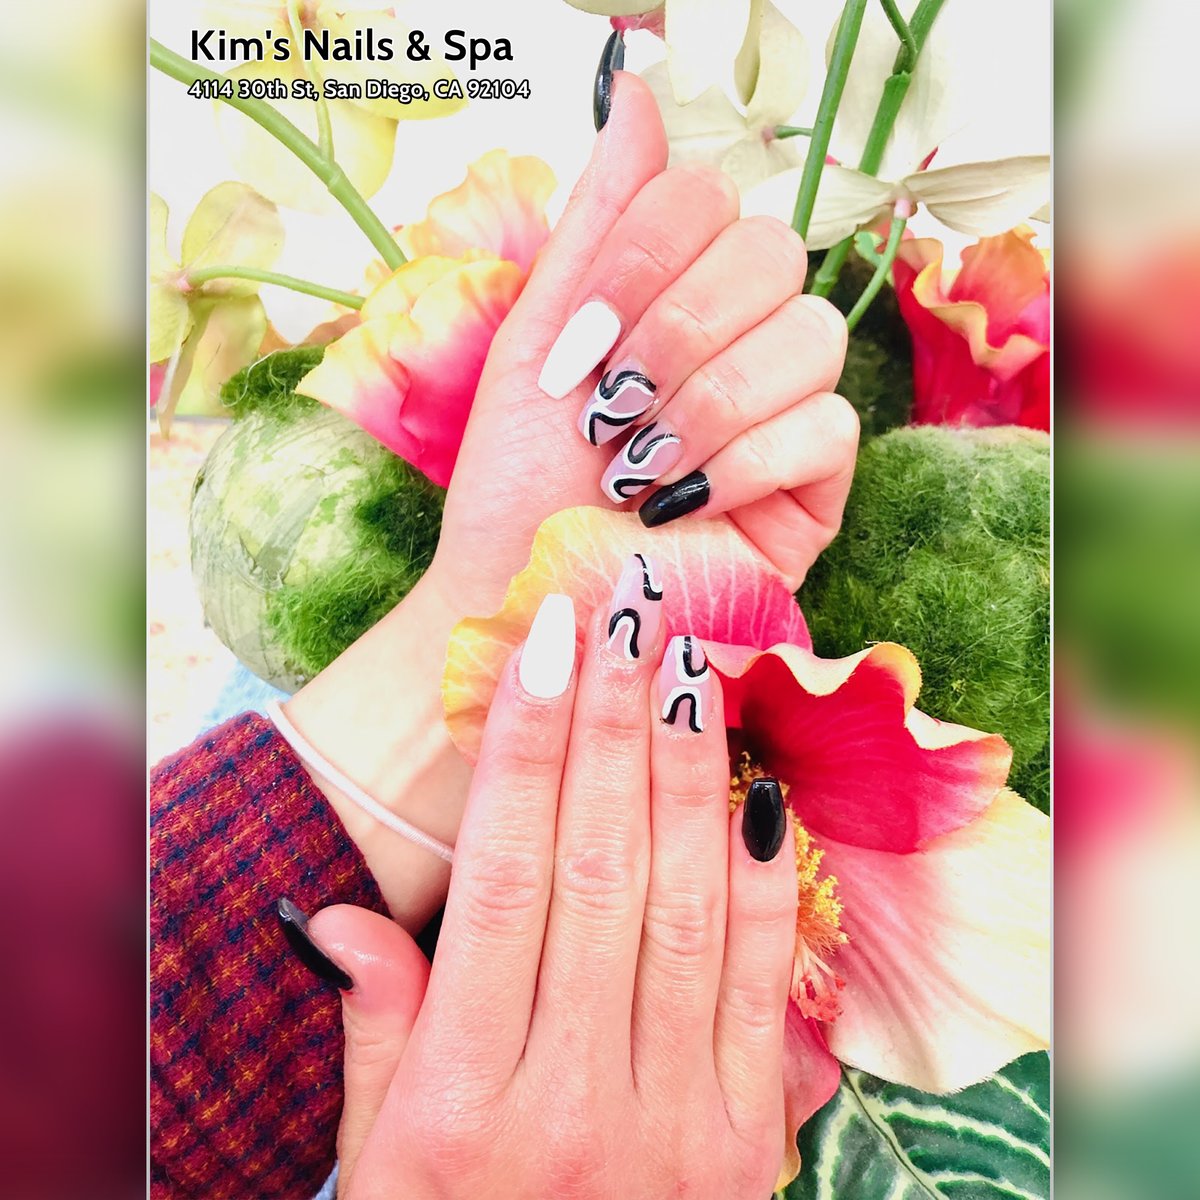 This nail idea is something that you should try on your nails.
🌷🌷Kim's Nails & Spa 
kimsnailsspasandiego.com
4114 30th St, San Diego, CA 92104🌷🌷
#fashion #nails #nail #beauty #salon #art #nailstyle #nailpolish #lovenails #nailsdesign #love #style